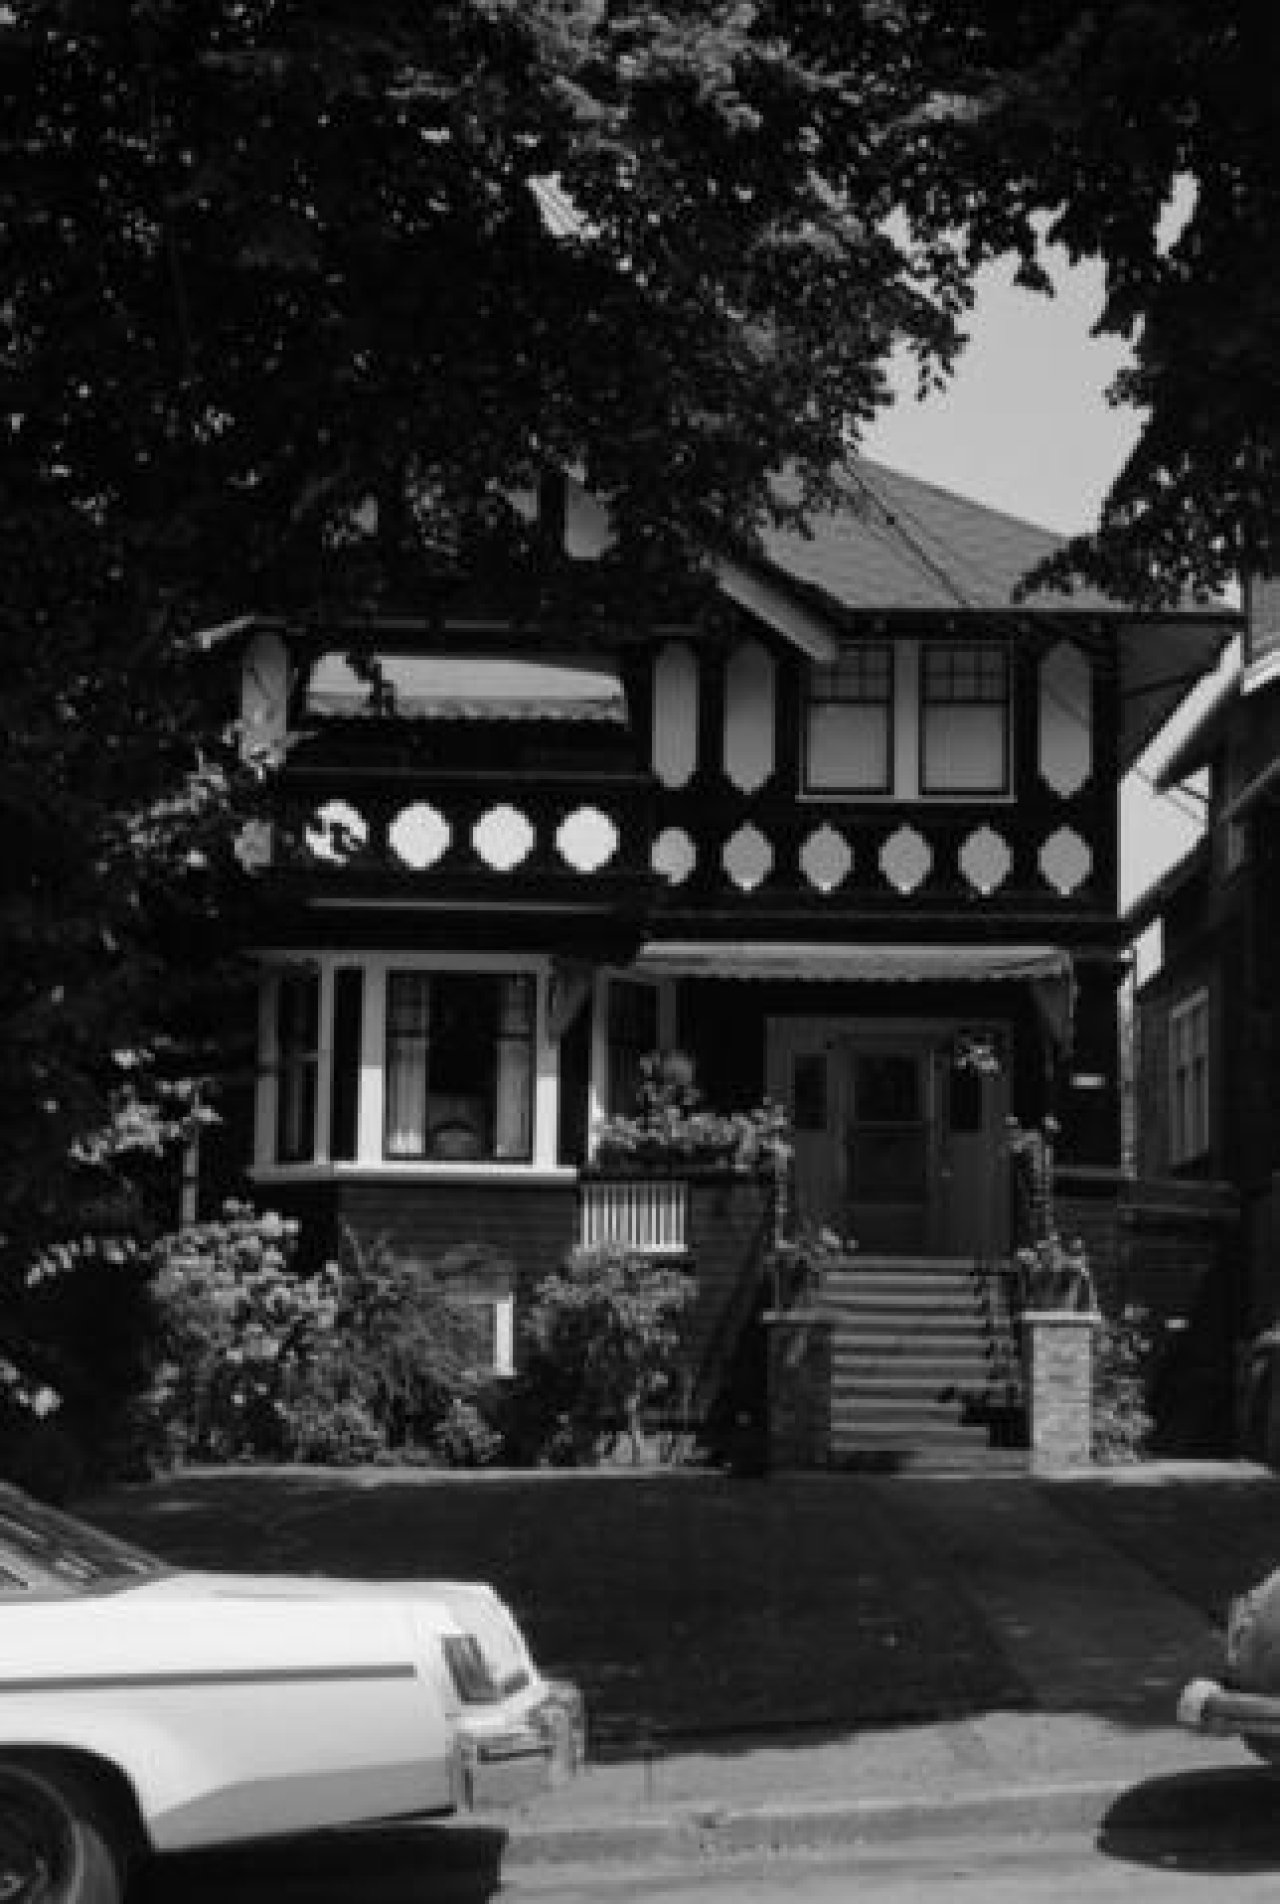 2631 West 2nd Avenue c. 1978
Source: City of Vancouver Archives Item : CVA 786-15.20 - 2631 W. 2nd Avenue